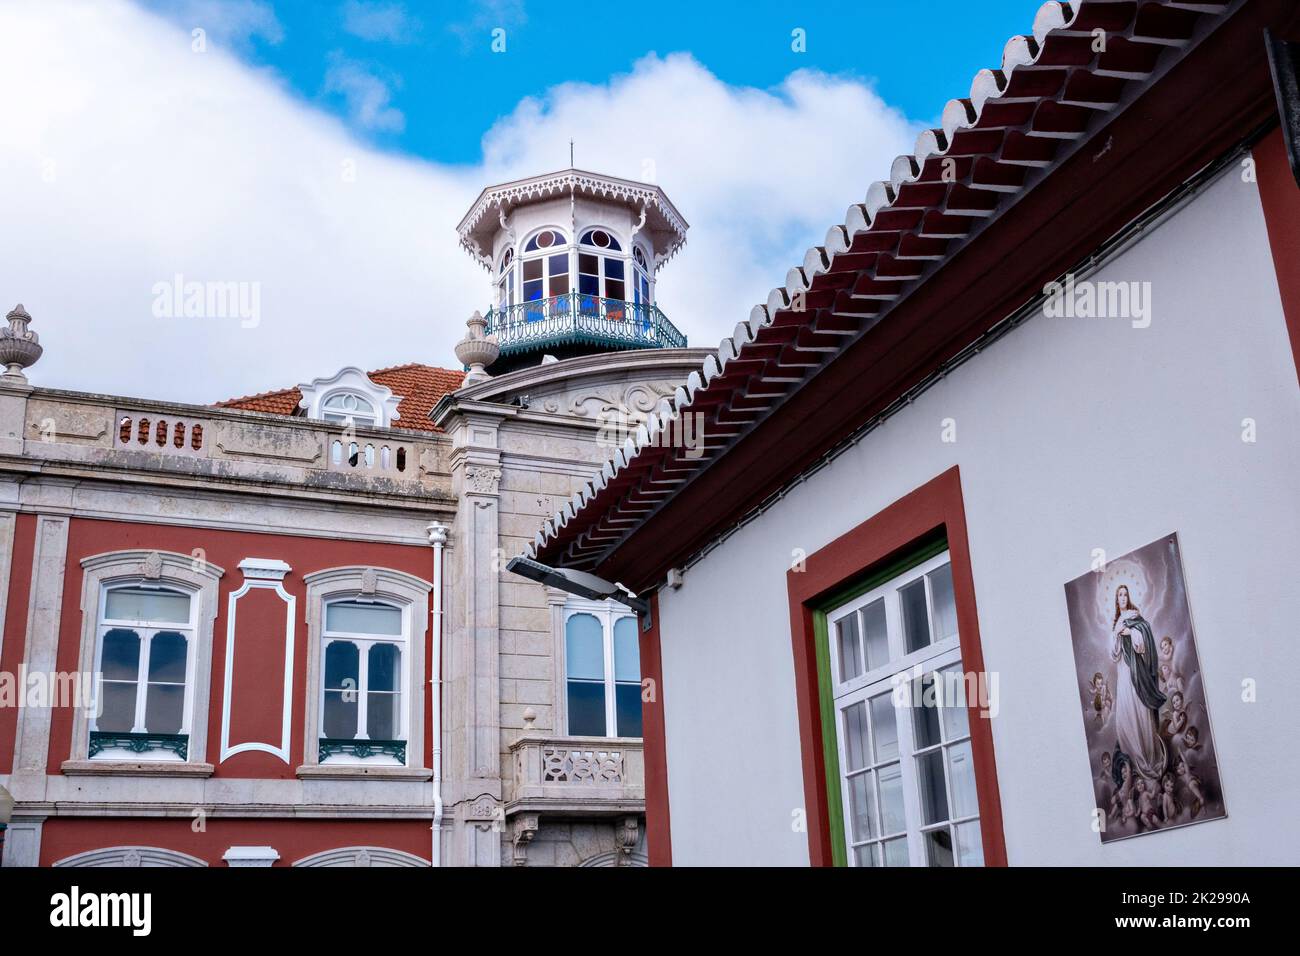 La residenza Silveira e Paulo, o Palacete Silveira e Paulo sulla Rua da Conceicao in Angra do Heroismo, Terceira Island, Azzorre, Portogallo. Foto Stock